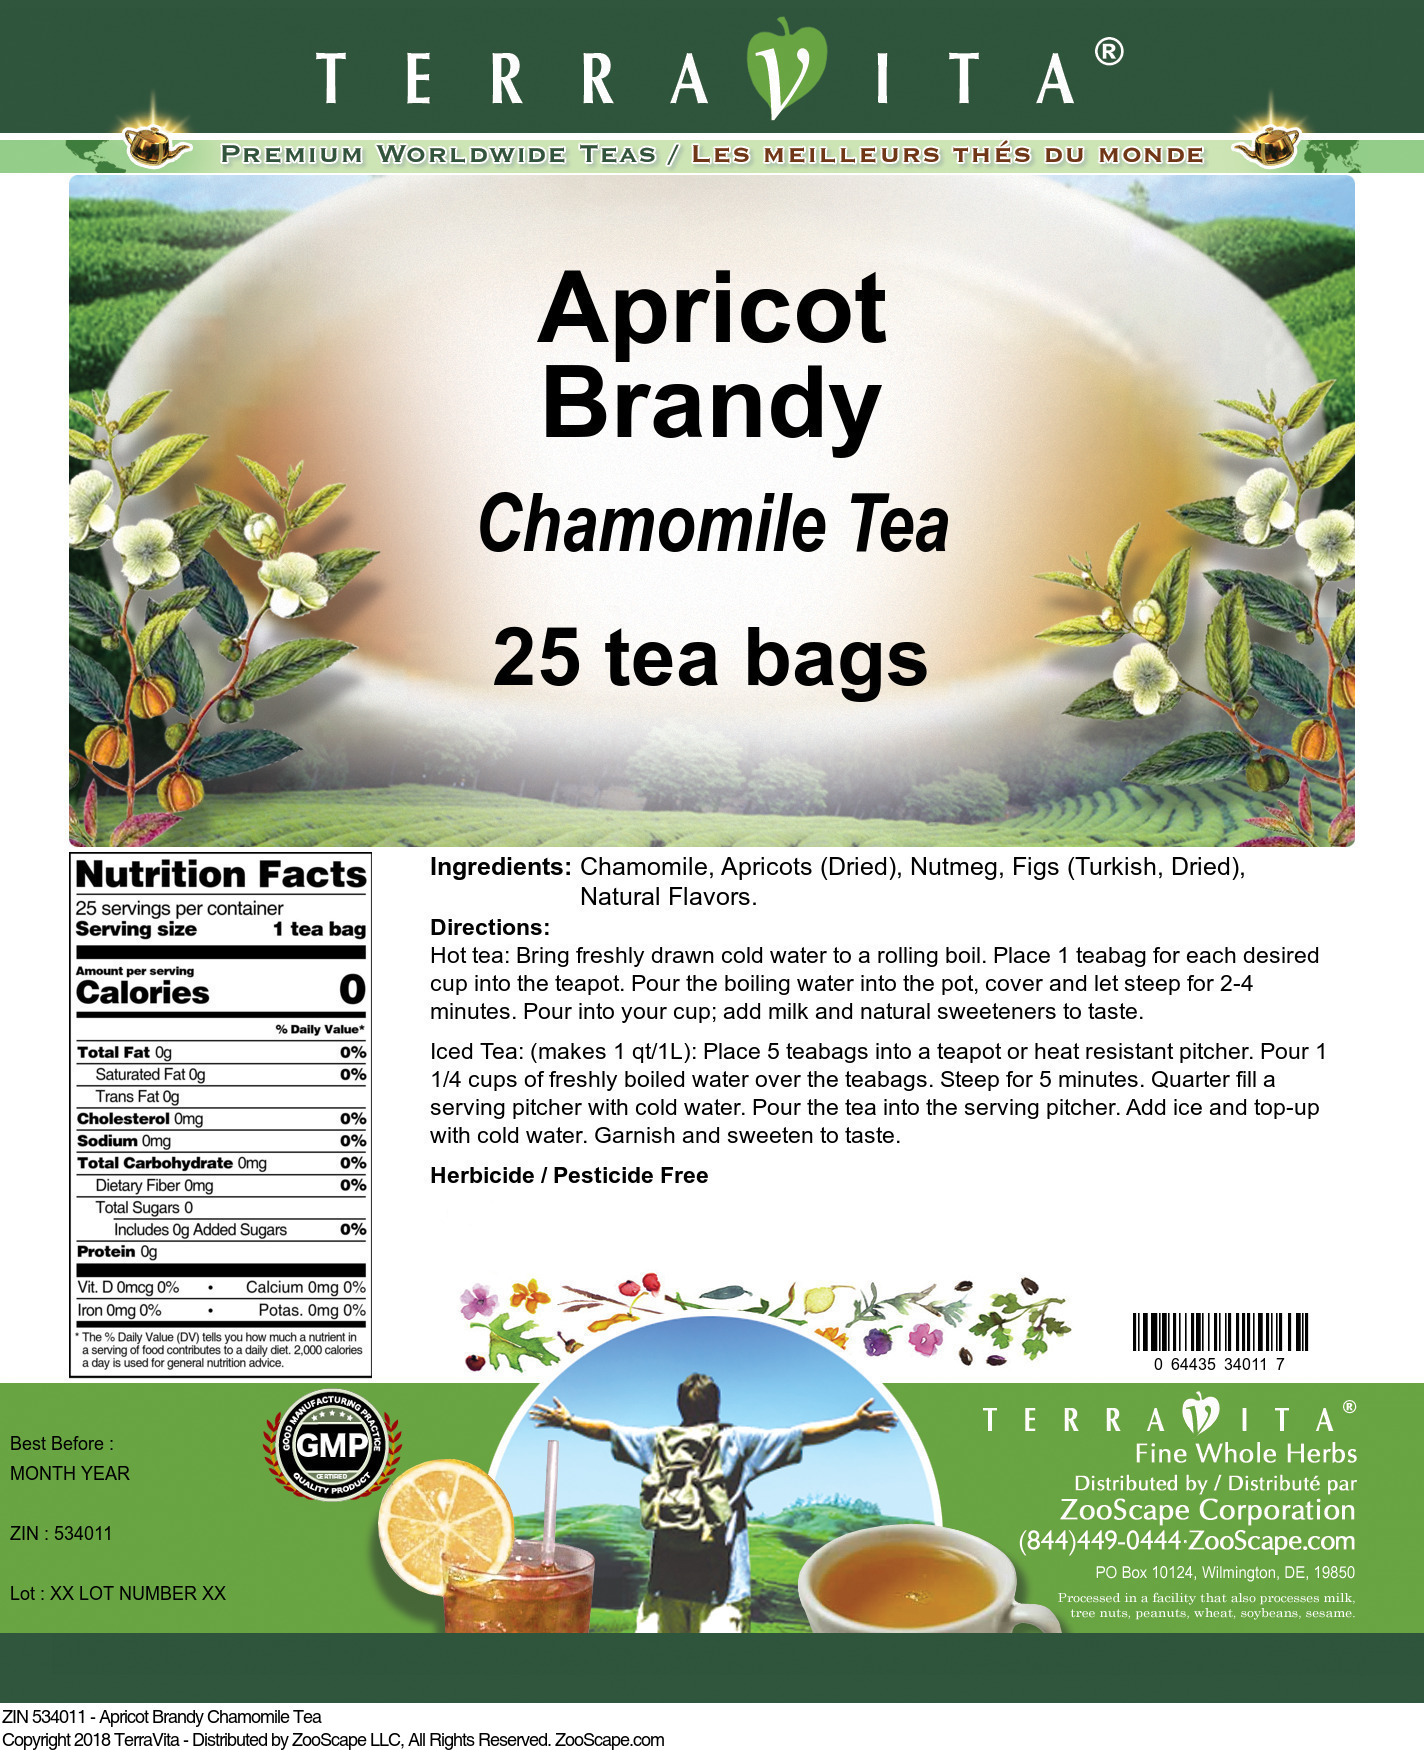 Apricot Brandy Chamomile Tea - Label